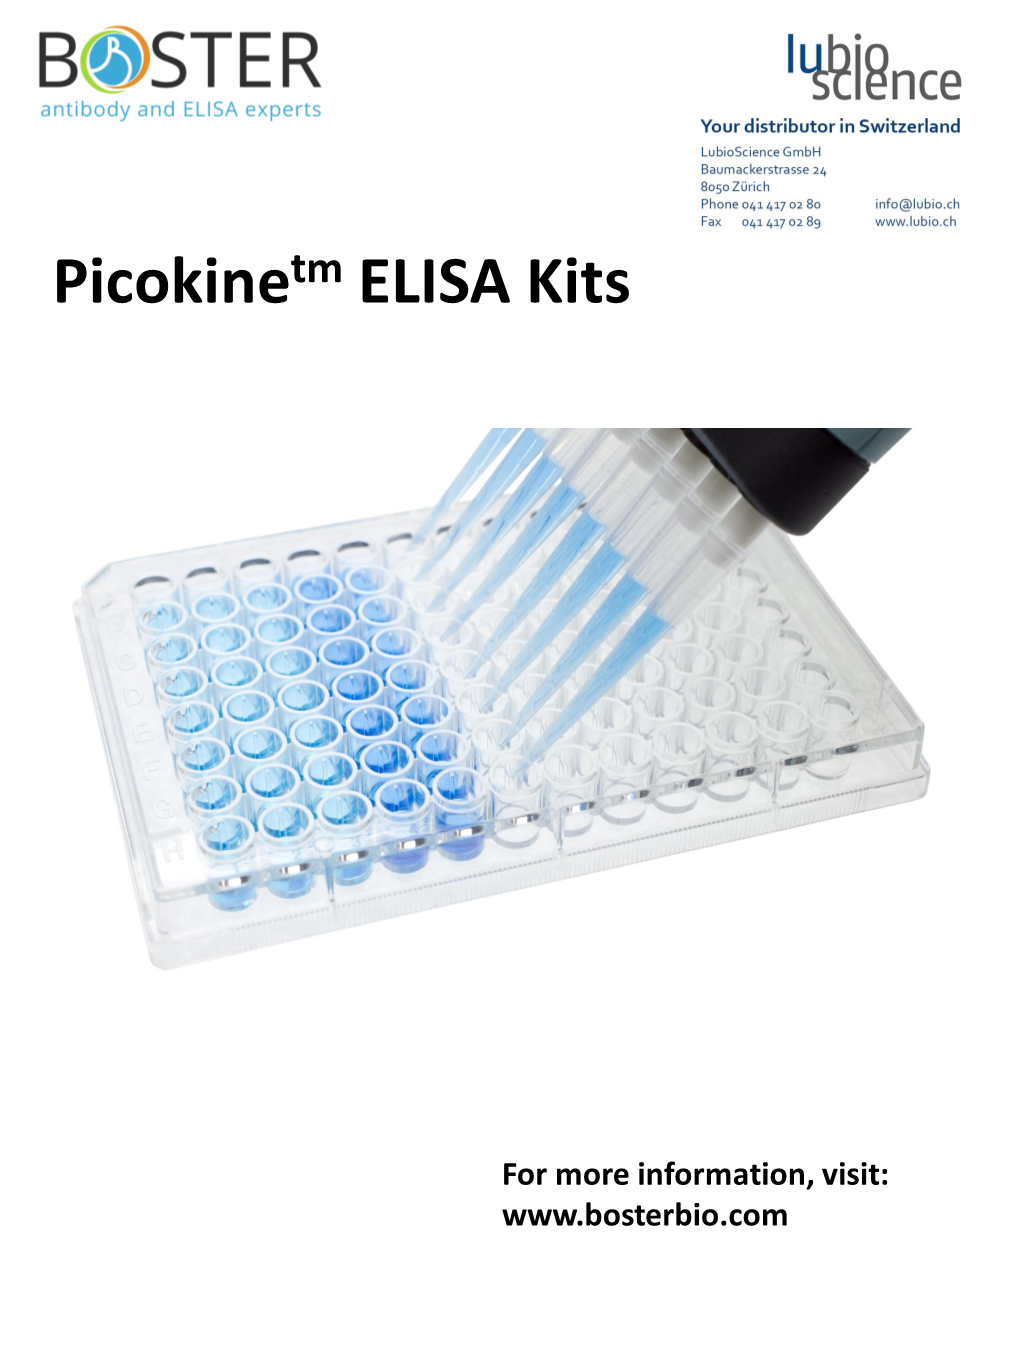 Boster Picokinetm ELISA Kits